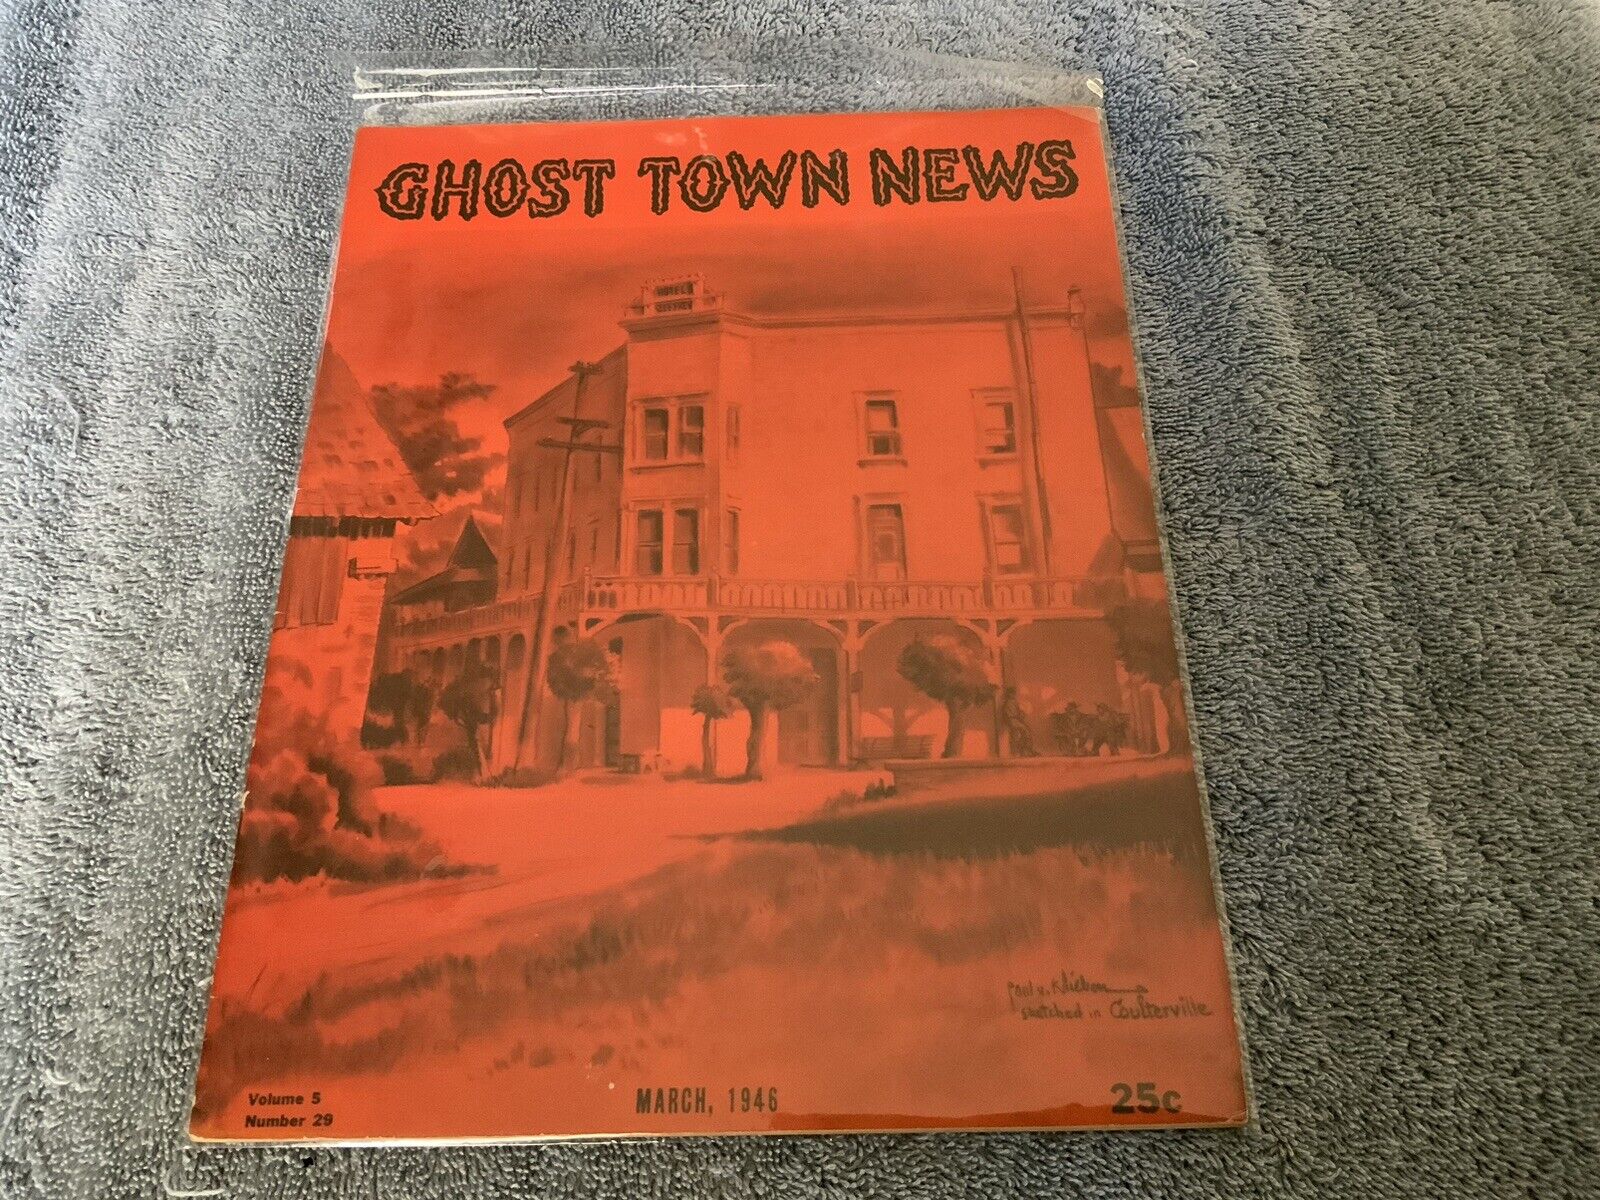 Vintage March. 1946 Vol. 5 #29 Knott\'s Berry Farm Place Ghost Town News